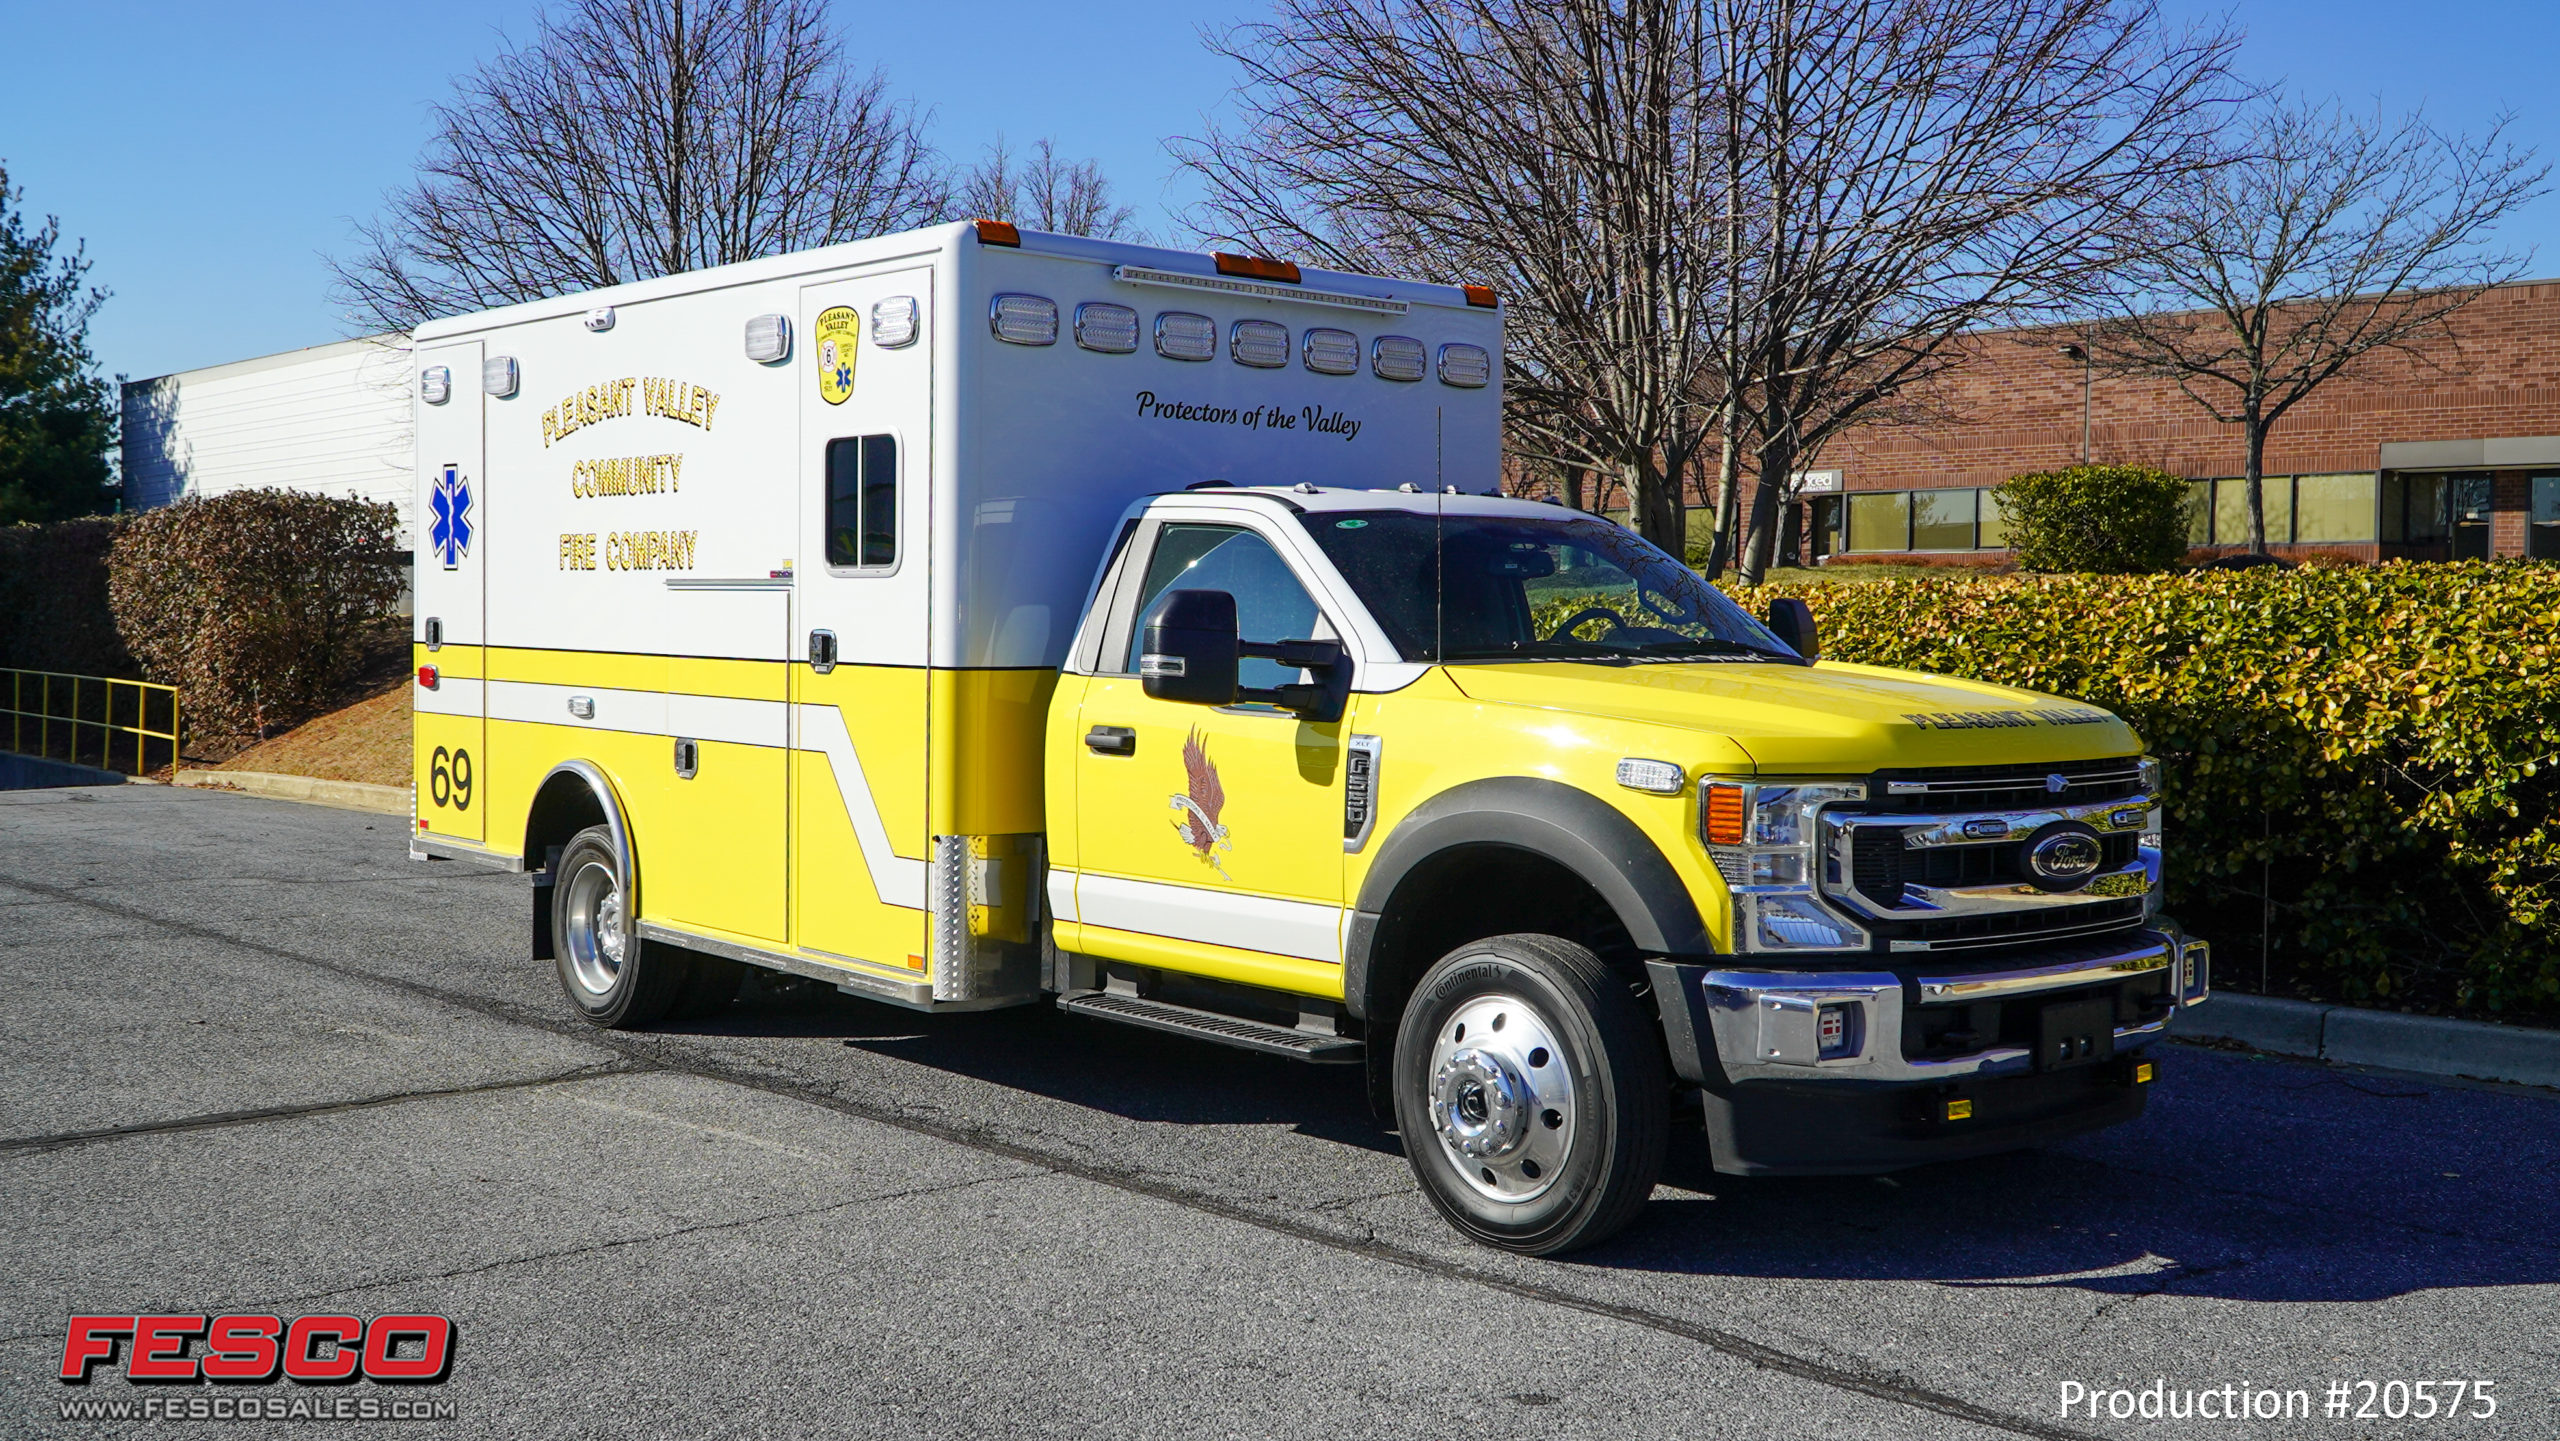 Pleasant-Valley-20575-24-scaled Horton Emergency Vehicle